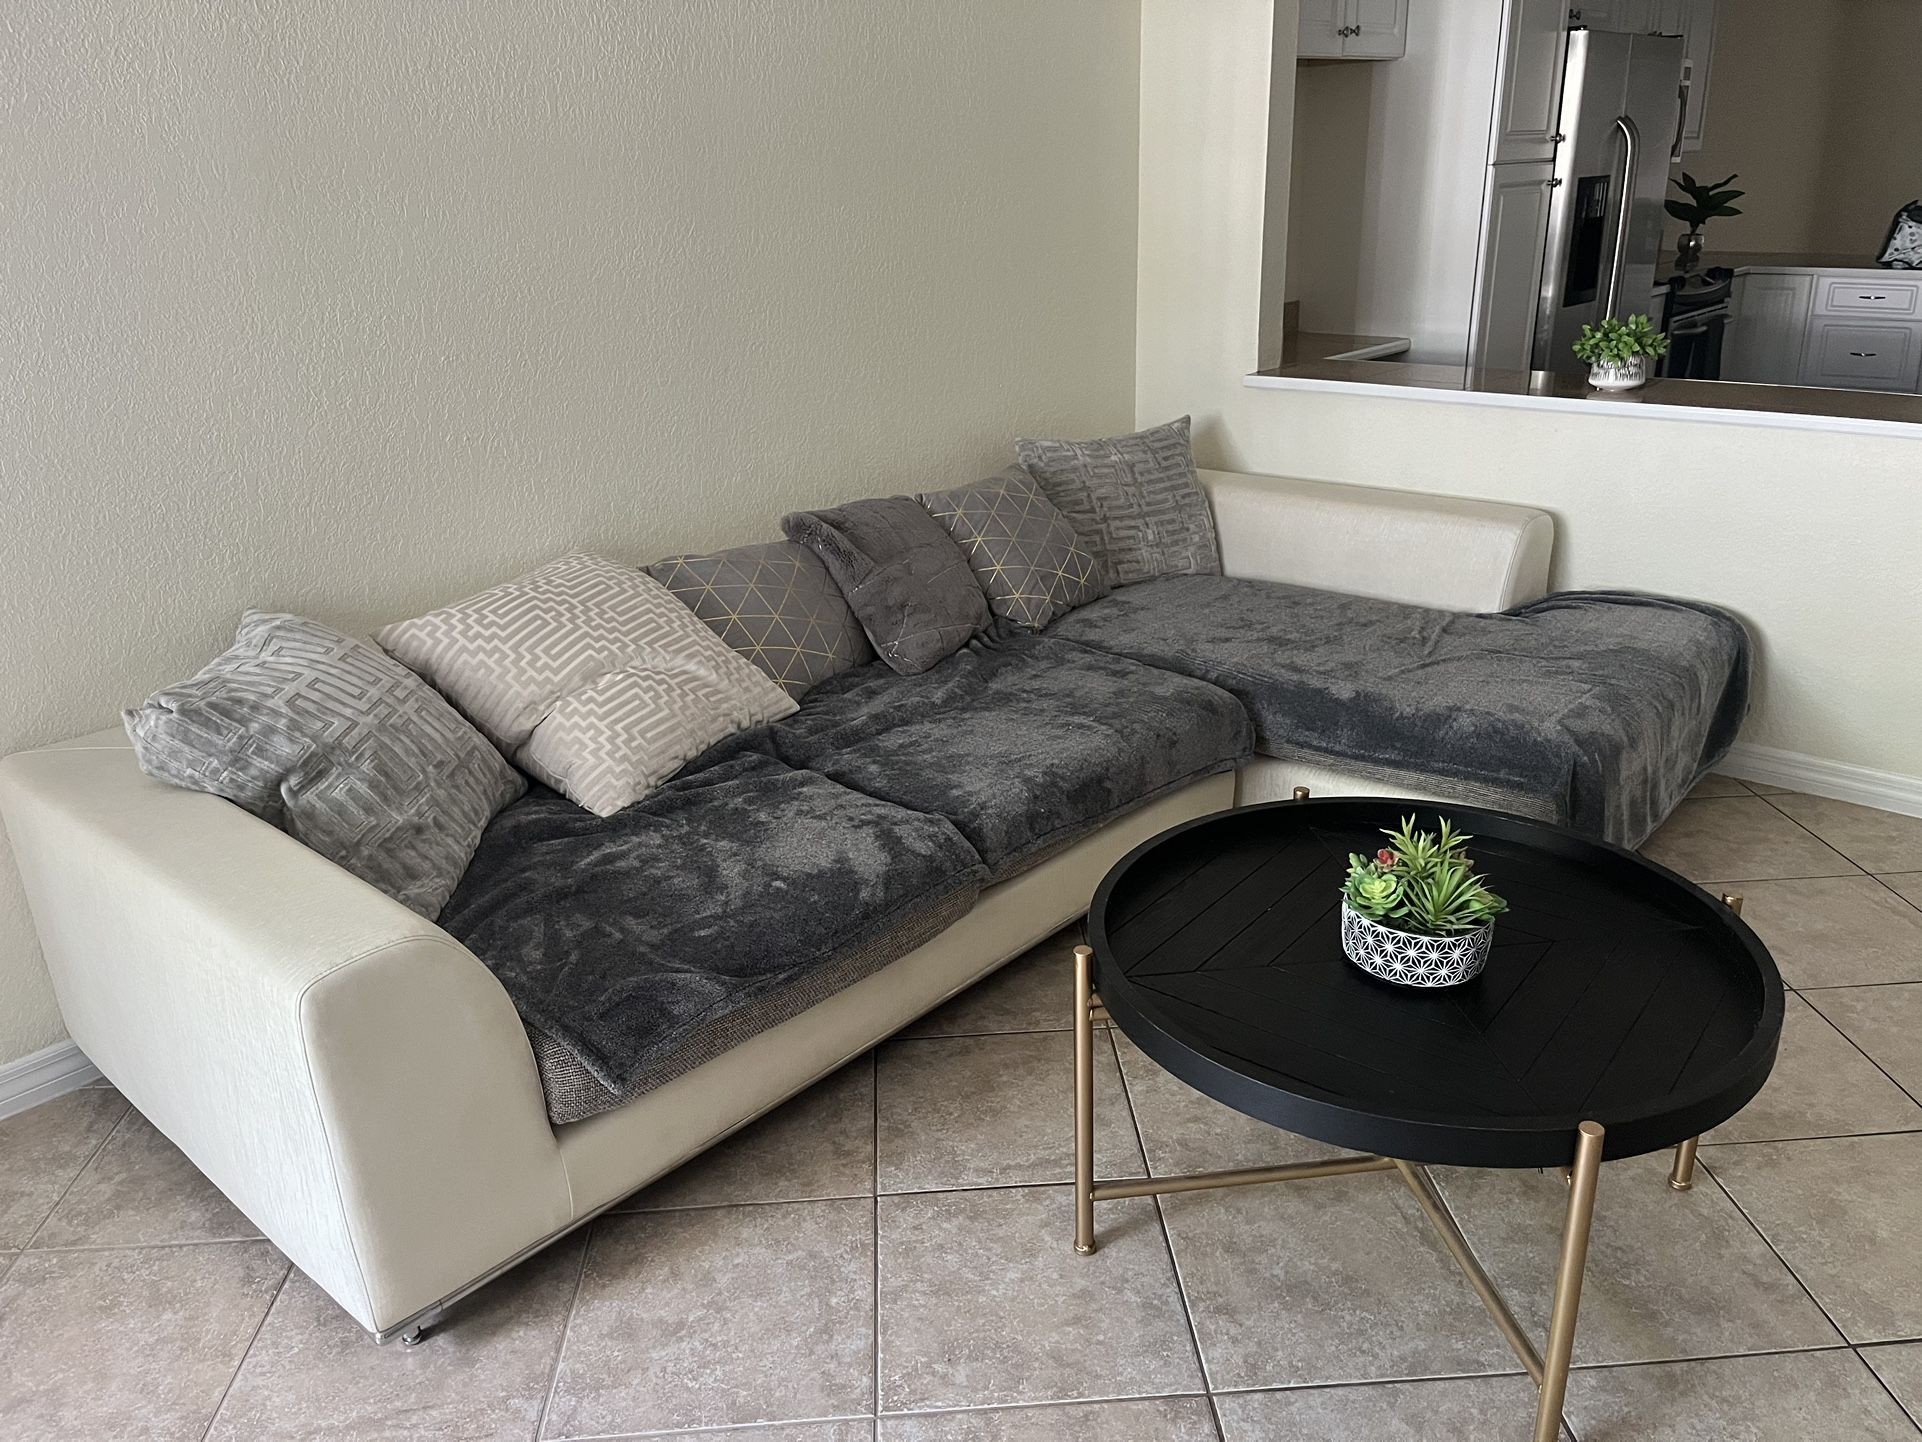 El Dorado couch with pillows 